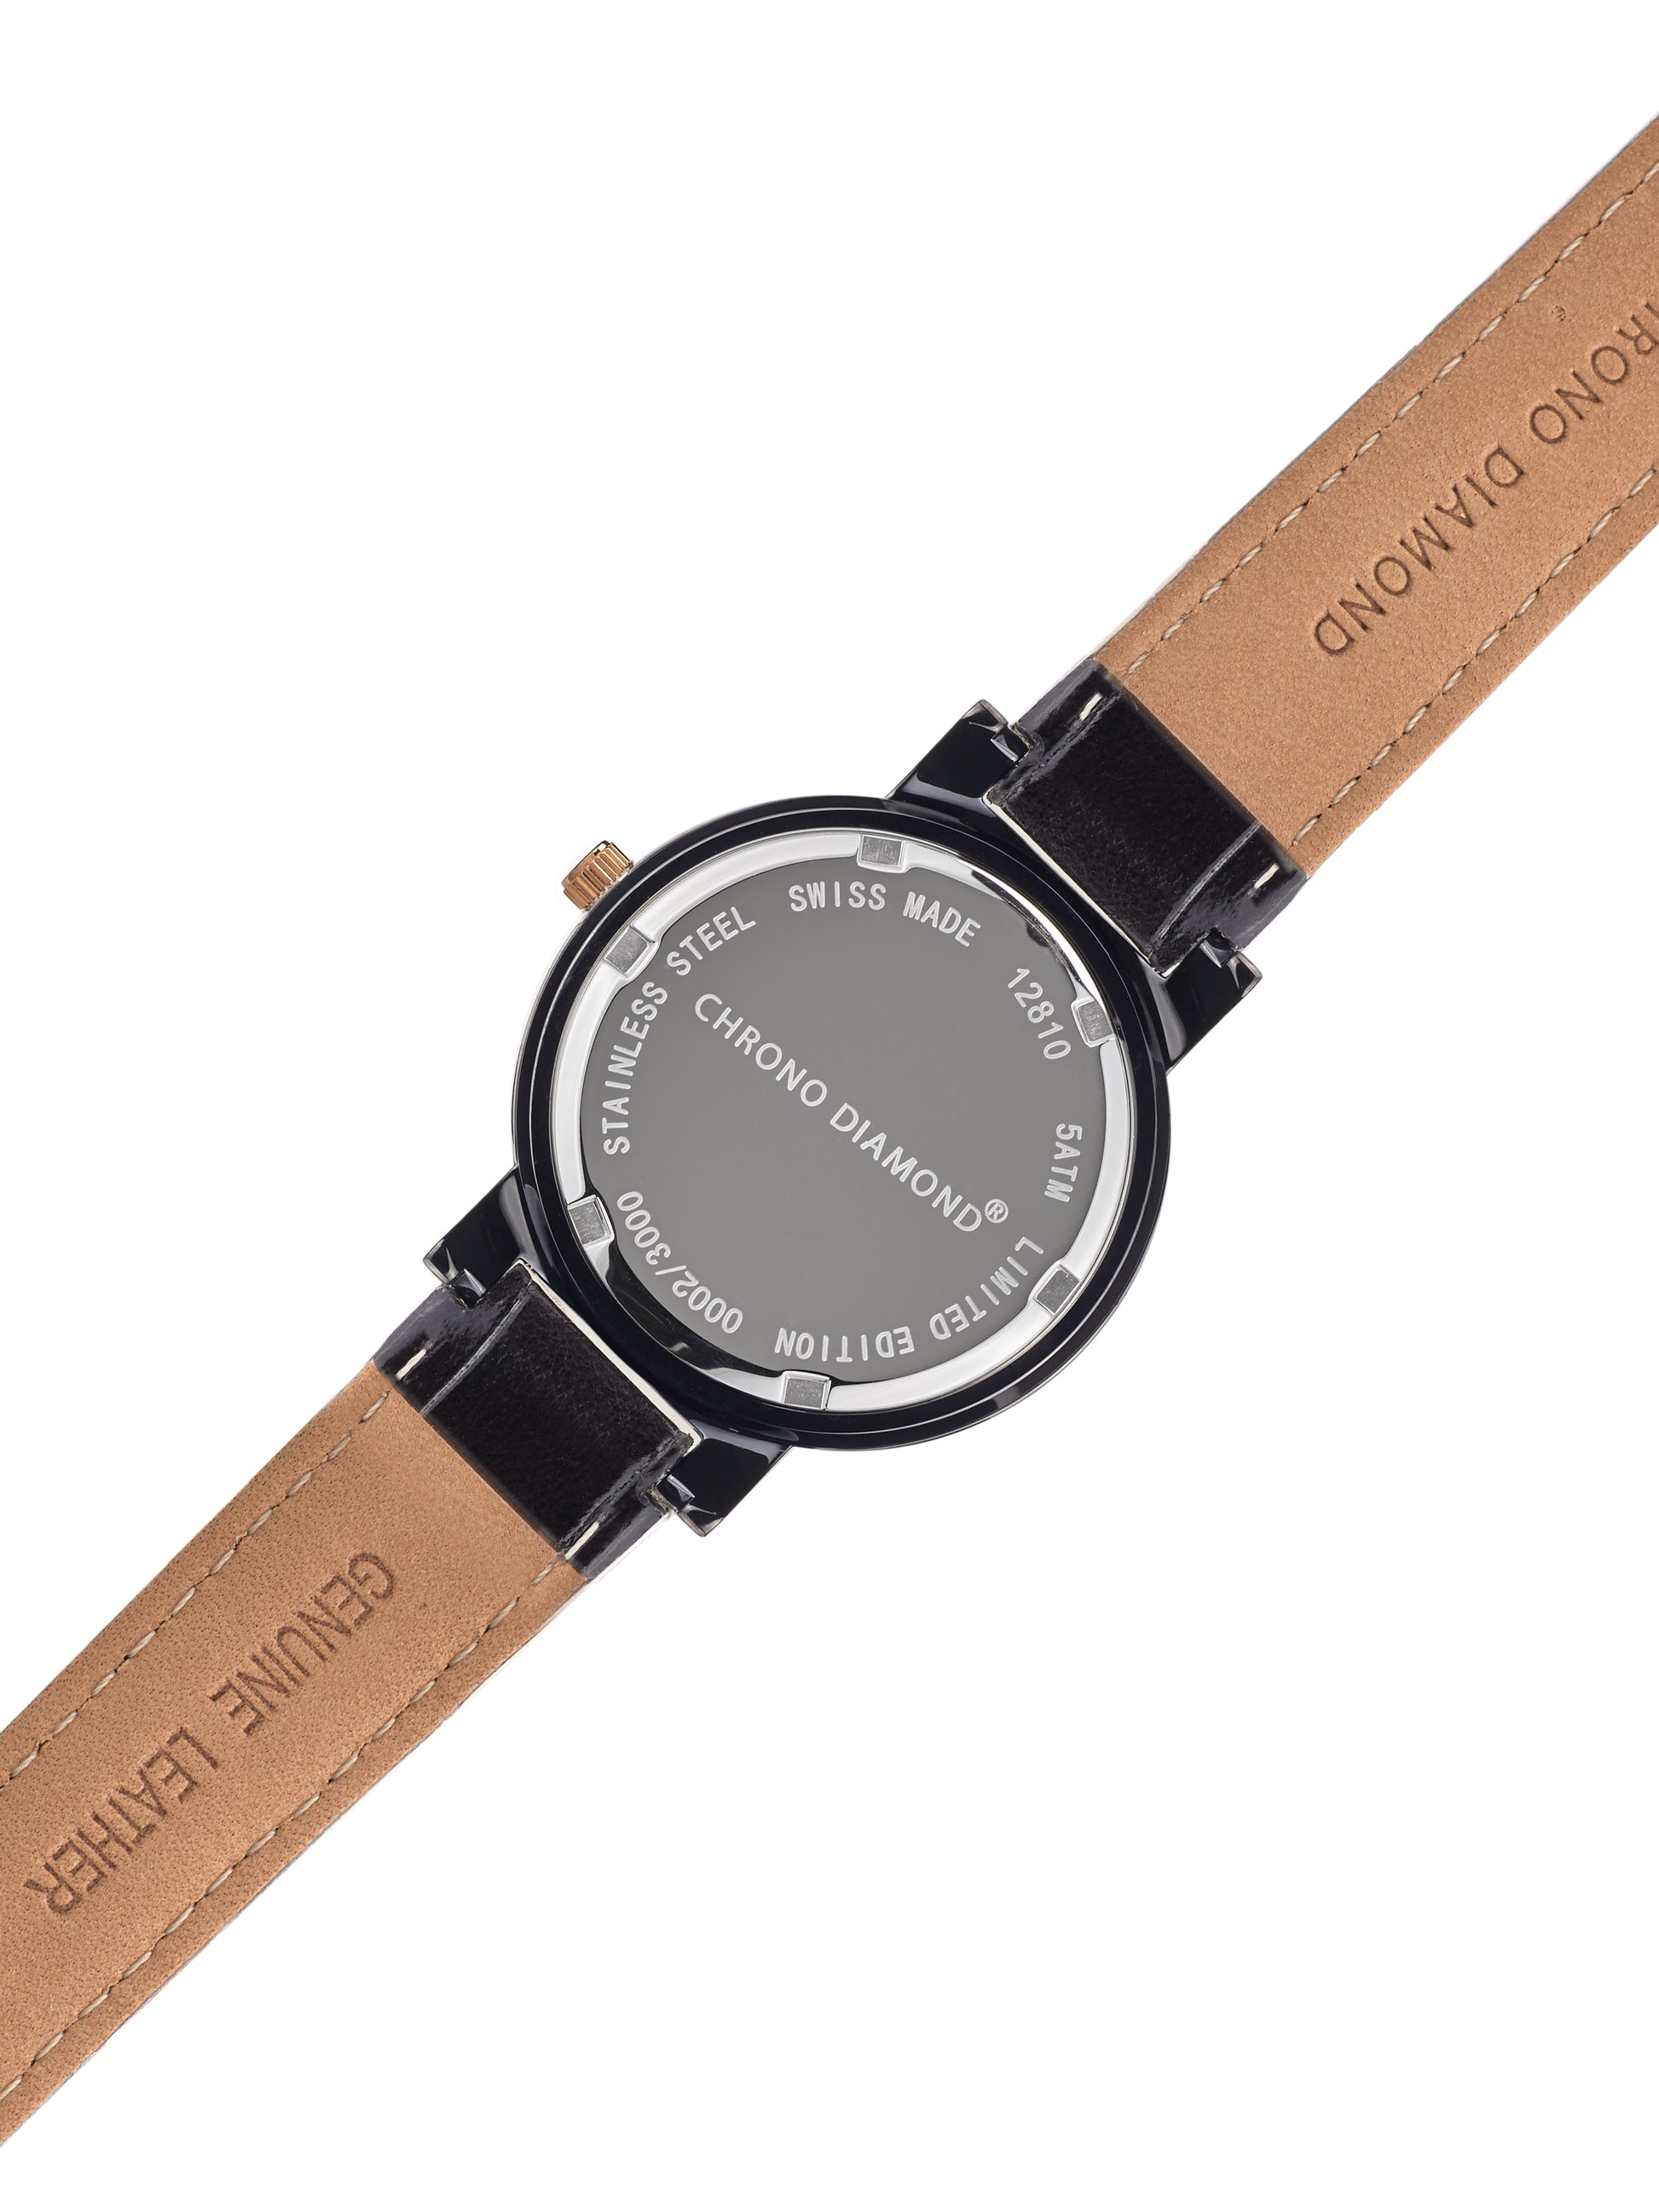 Automatic watches — Ilka — Chrono Diamond — gold IP black